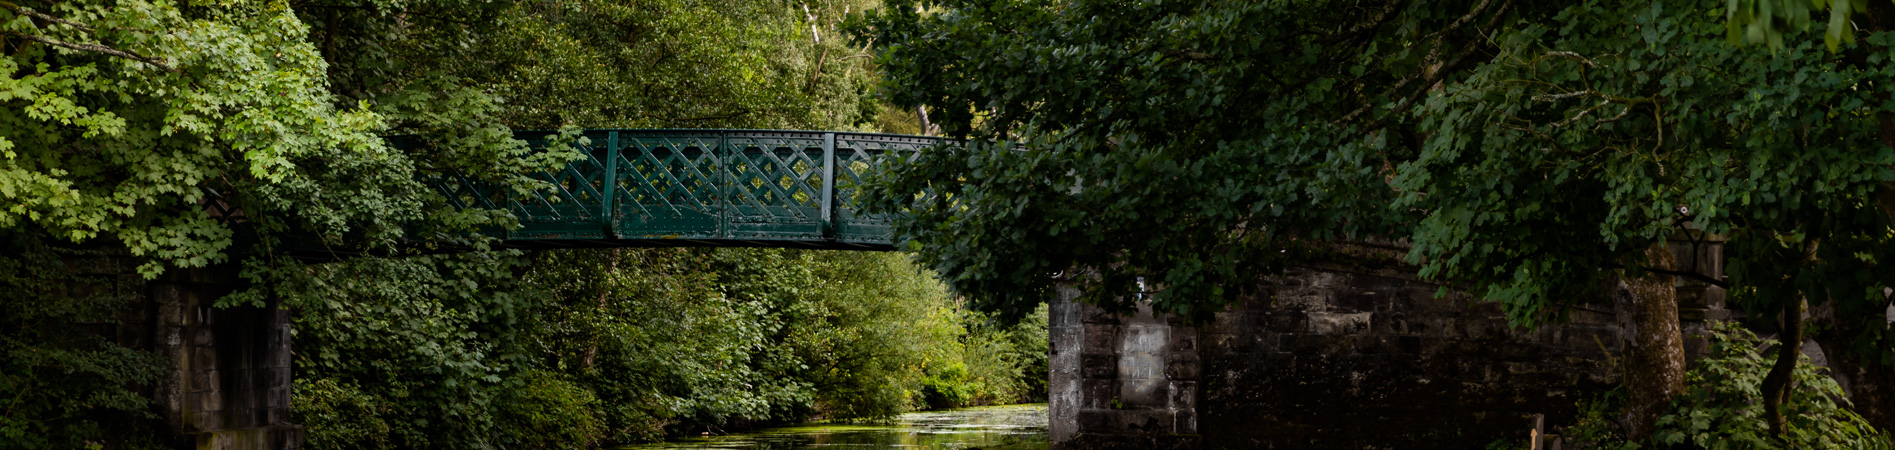 Banner-bridge-and-path